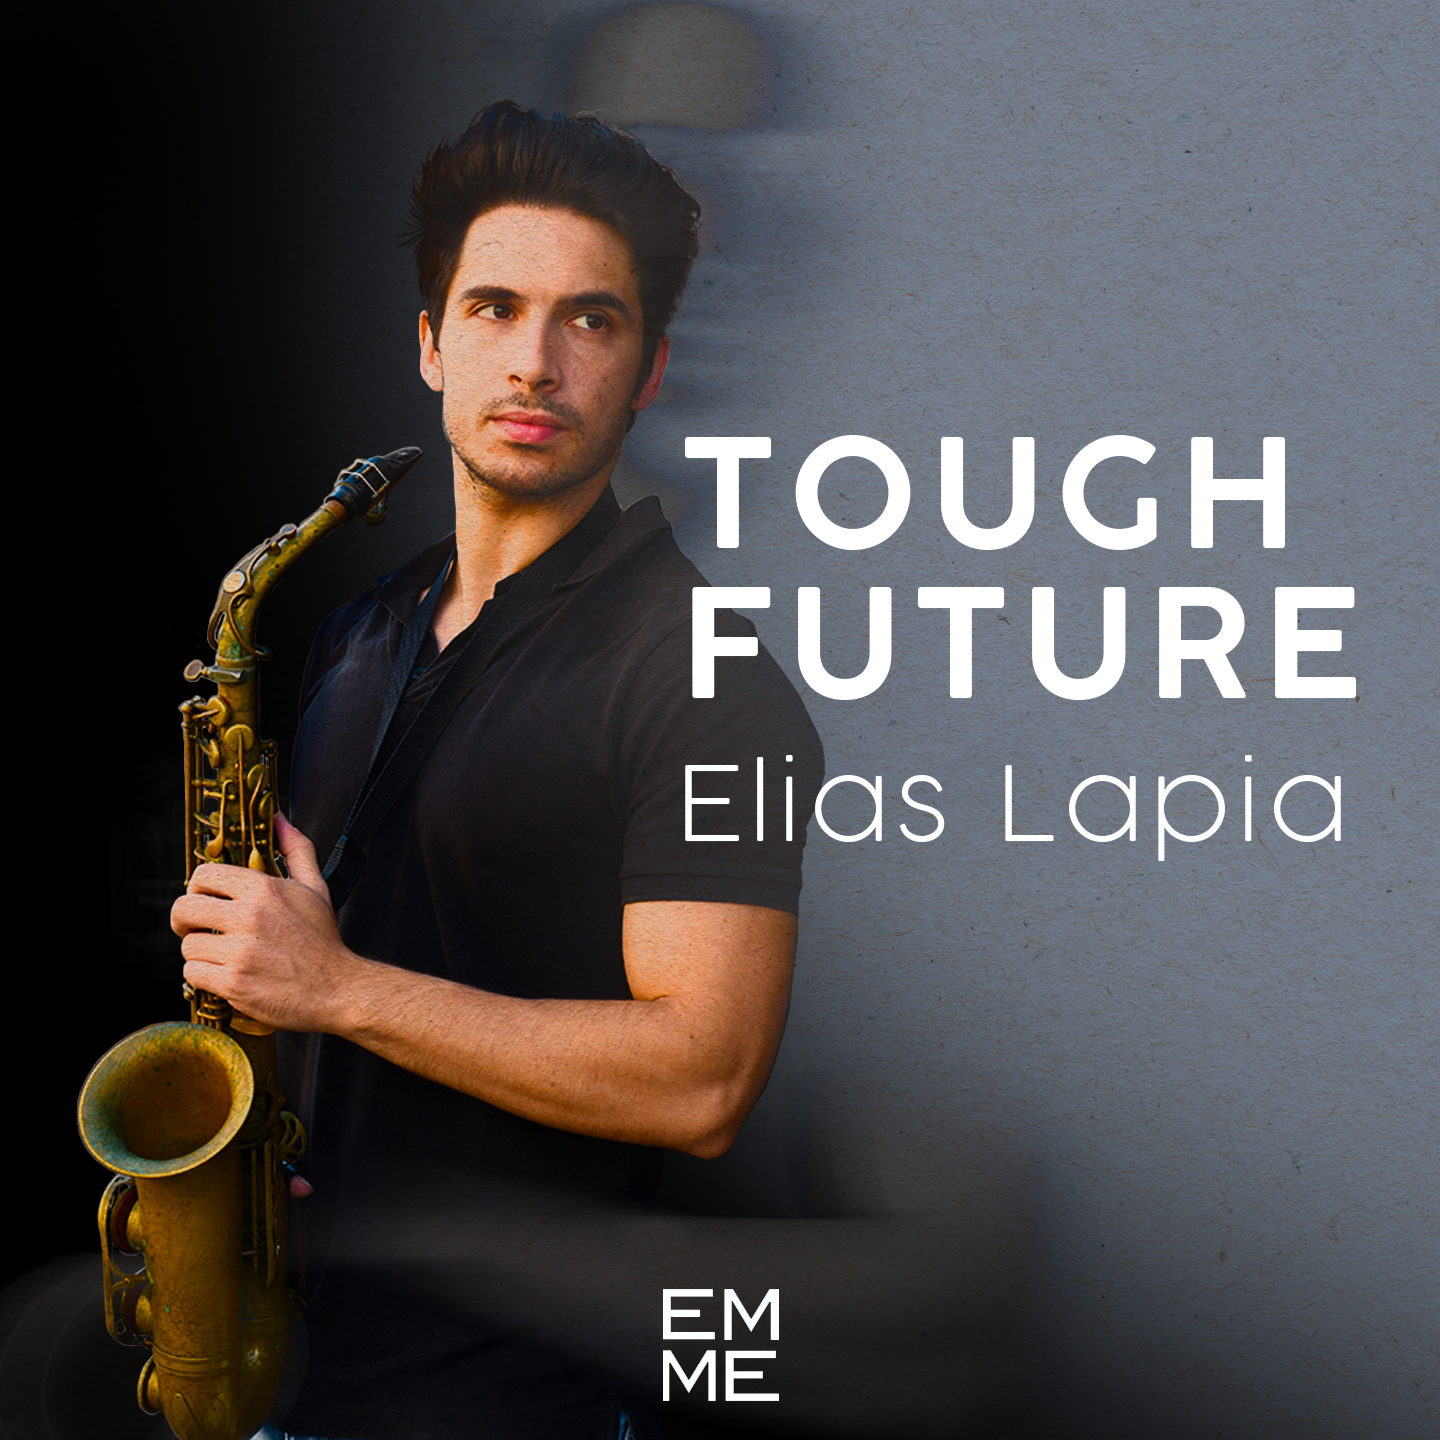 “Tough Future”: secondo disco di Elias Lapia